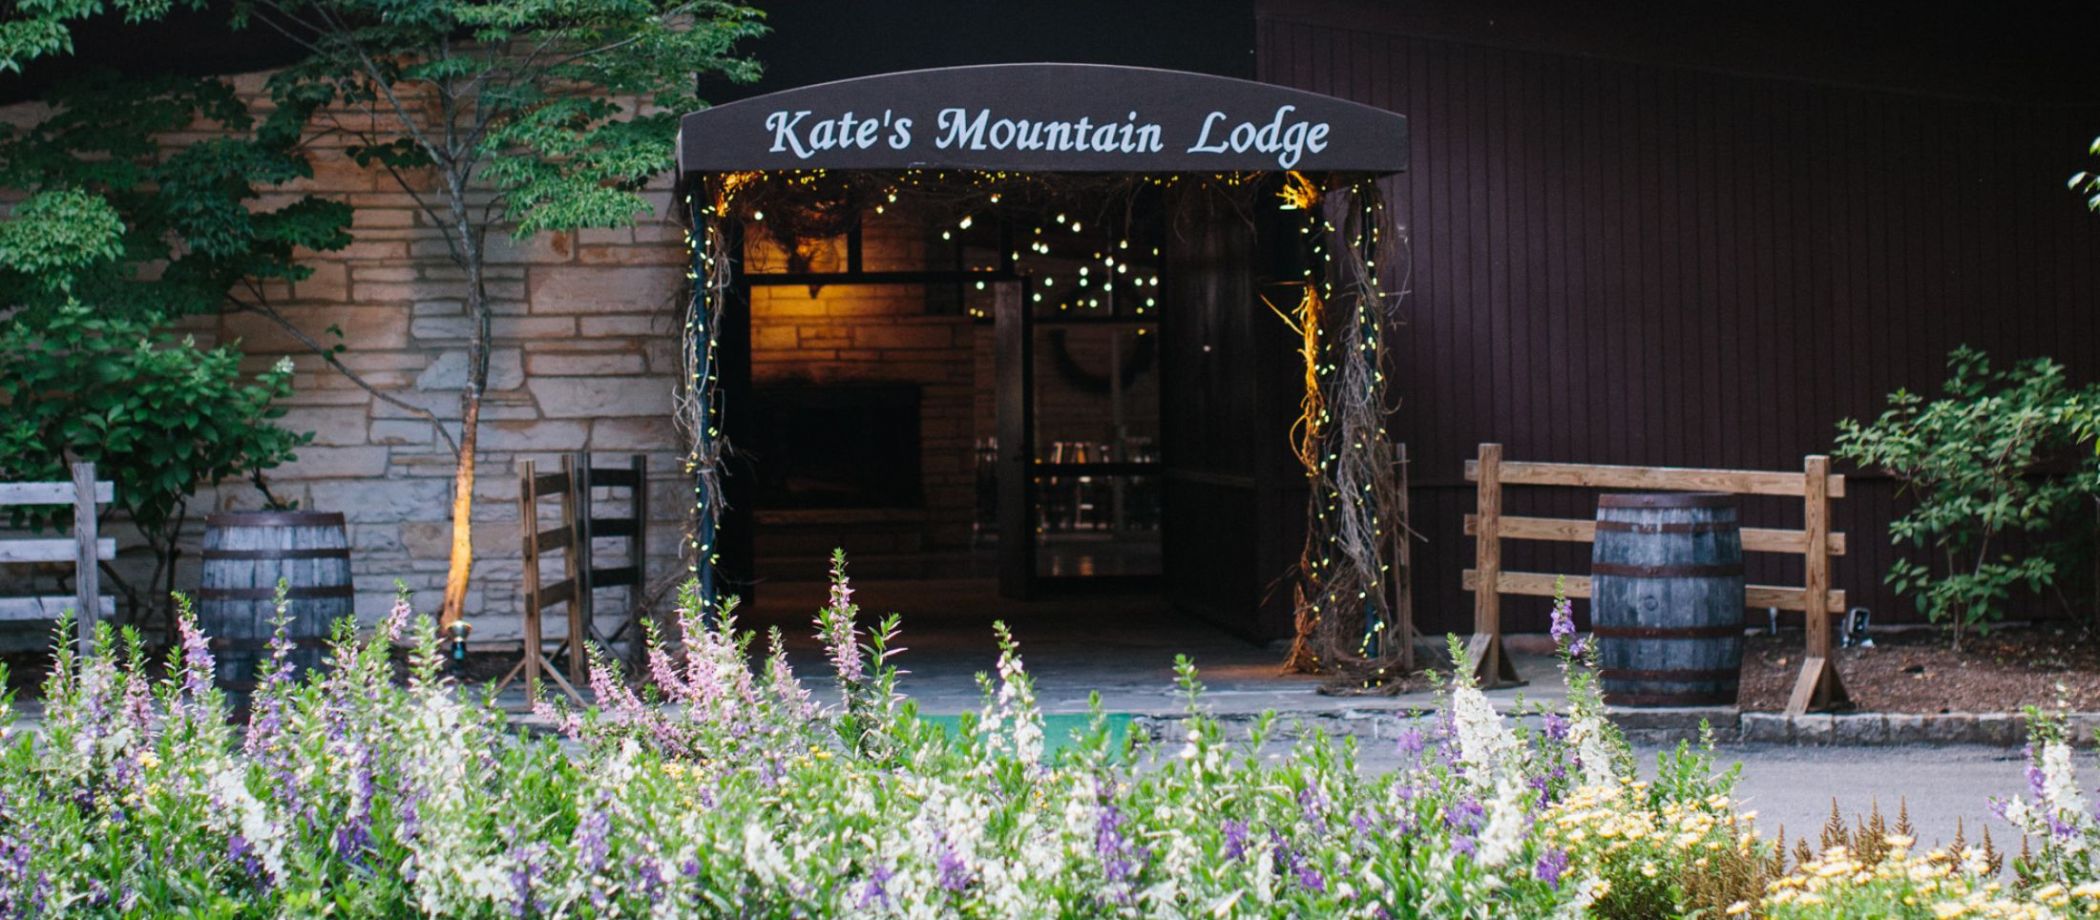 Kate's Mountain Lodge